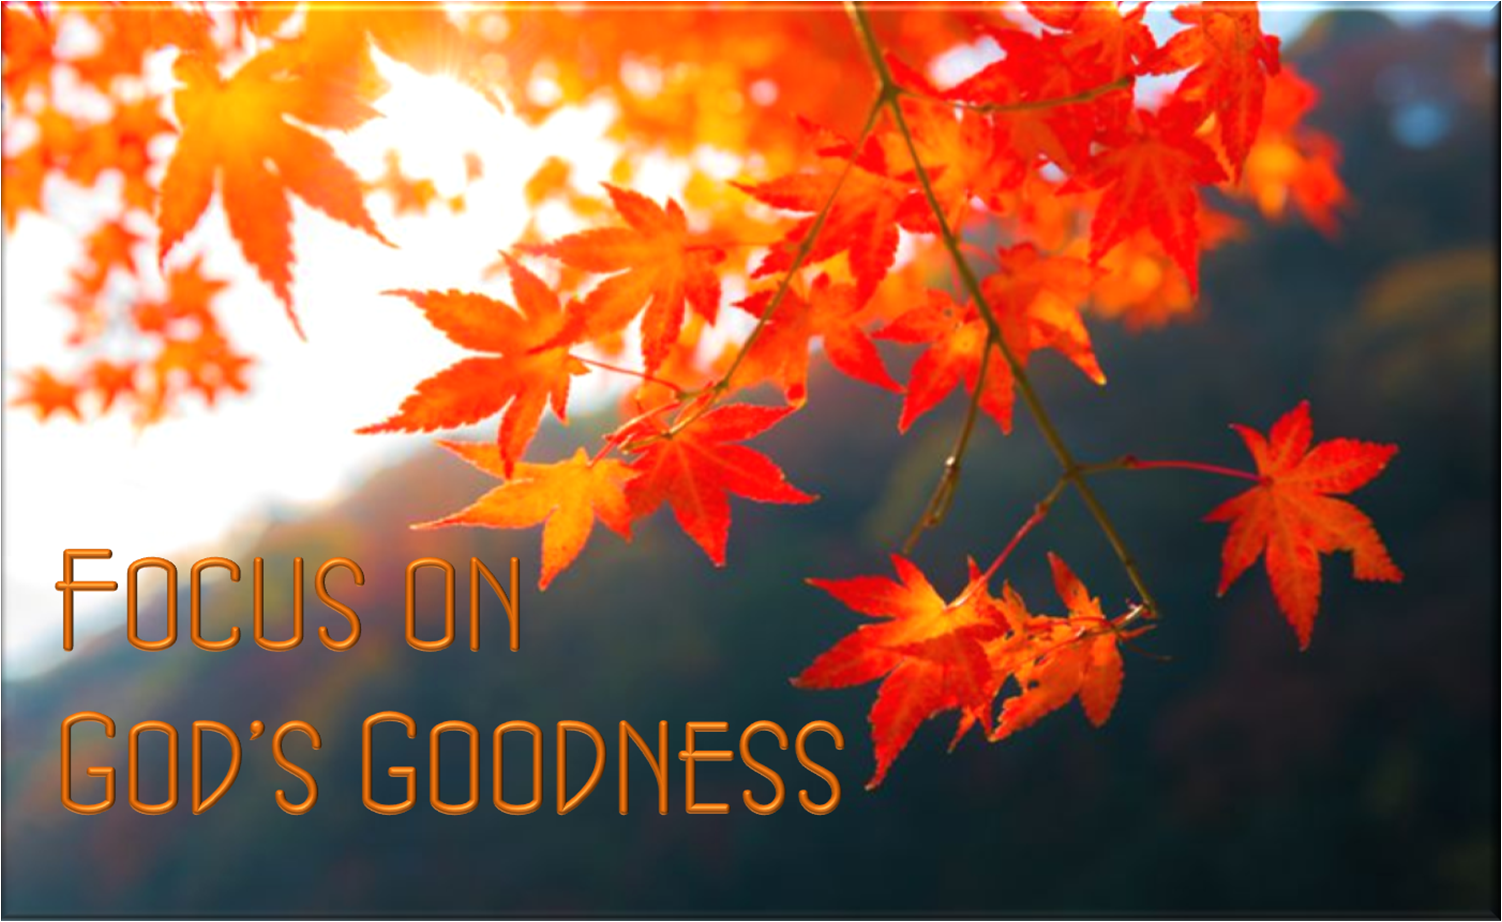 Focus on God's Goodness